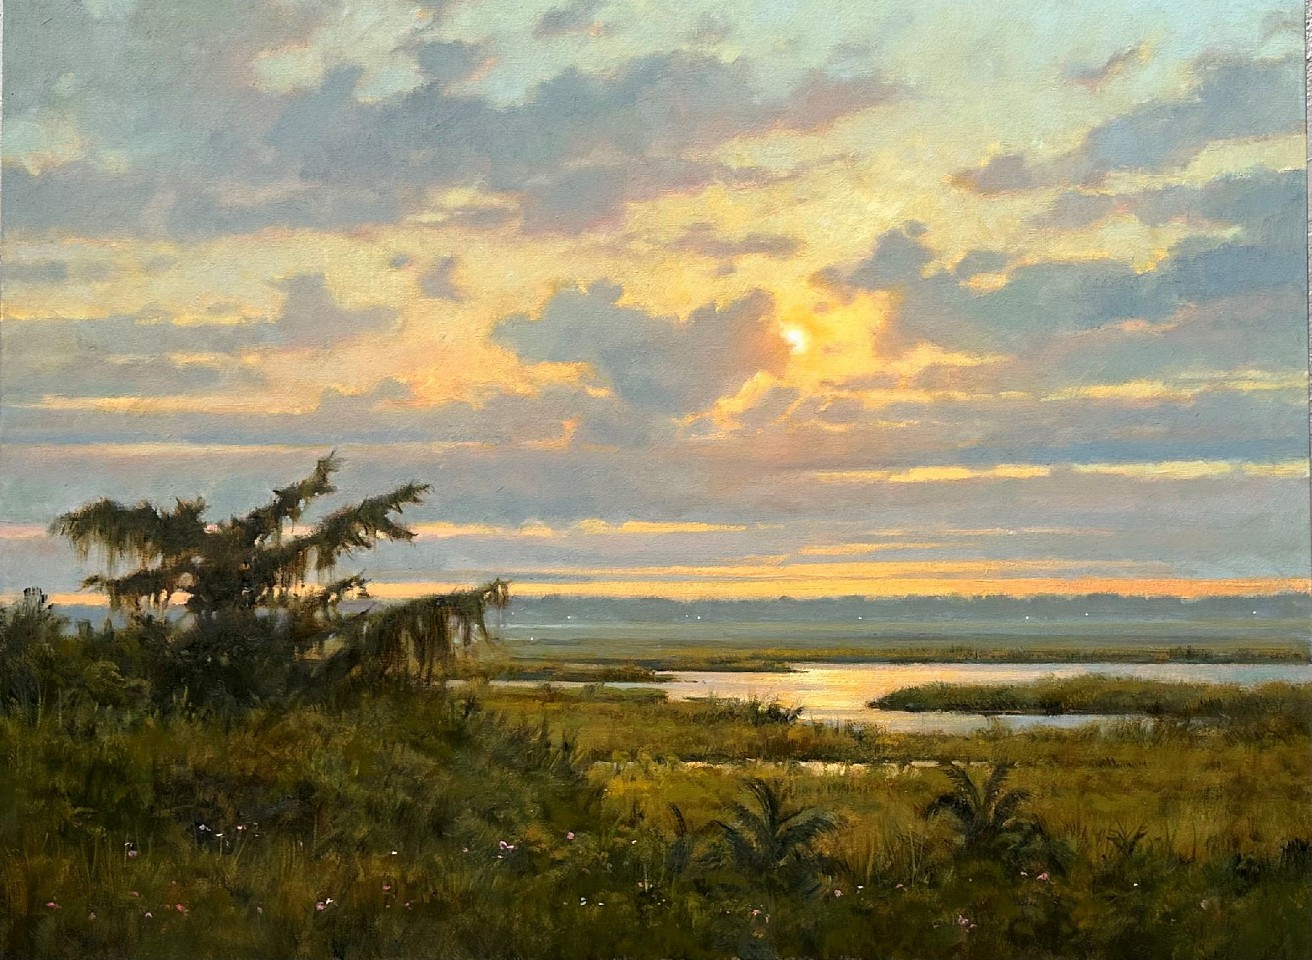 Frank Corso, Misty Evening Marsh
oil on canvas, 30 x 40 in. (76.2 x 101.6 cm)
FP240103